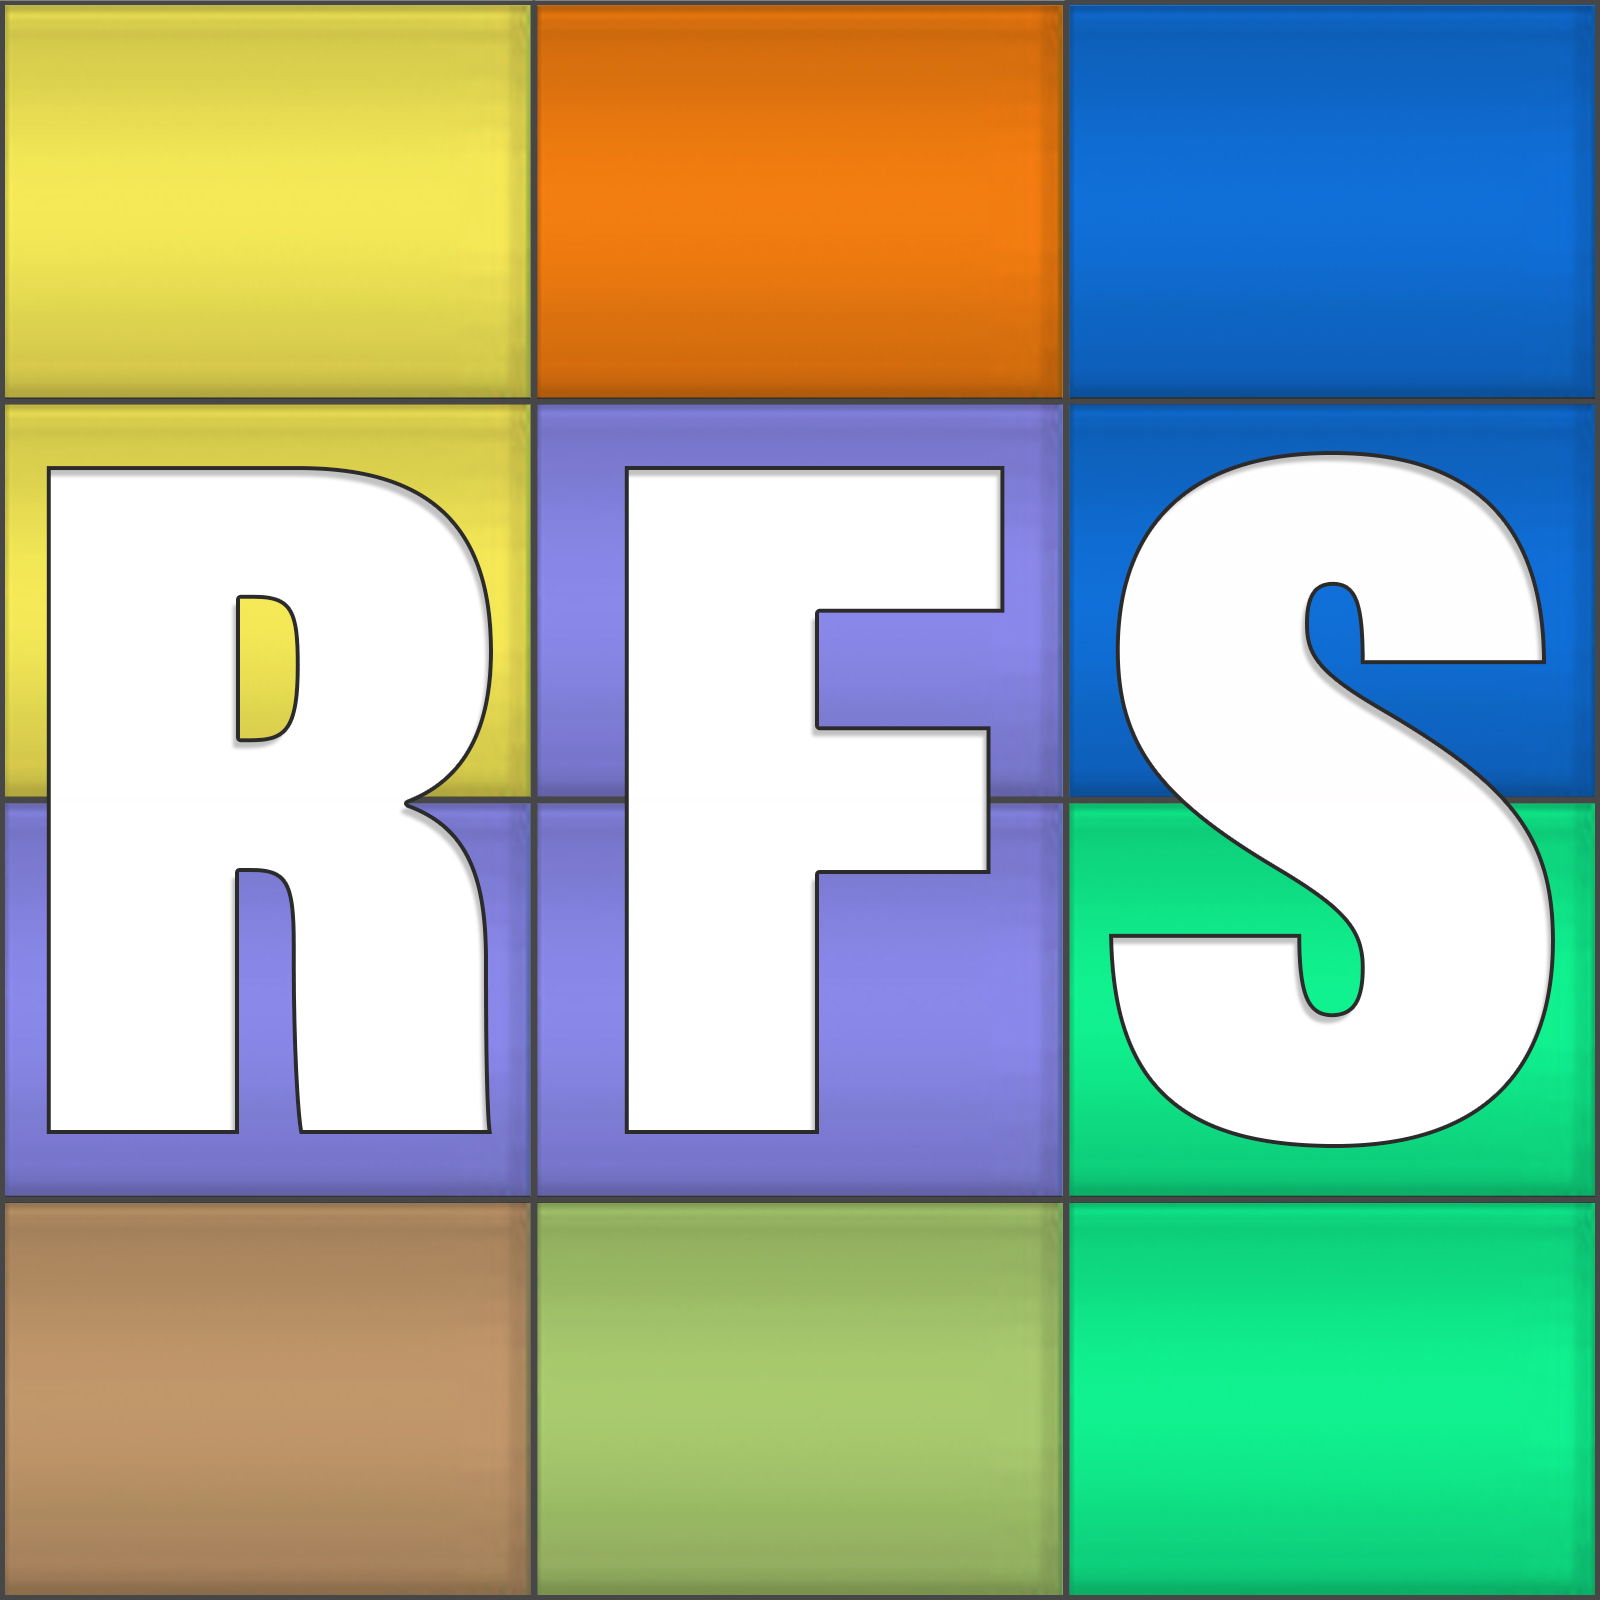 RaidFrameSettings - Blizzard Raid Frames Customization project image